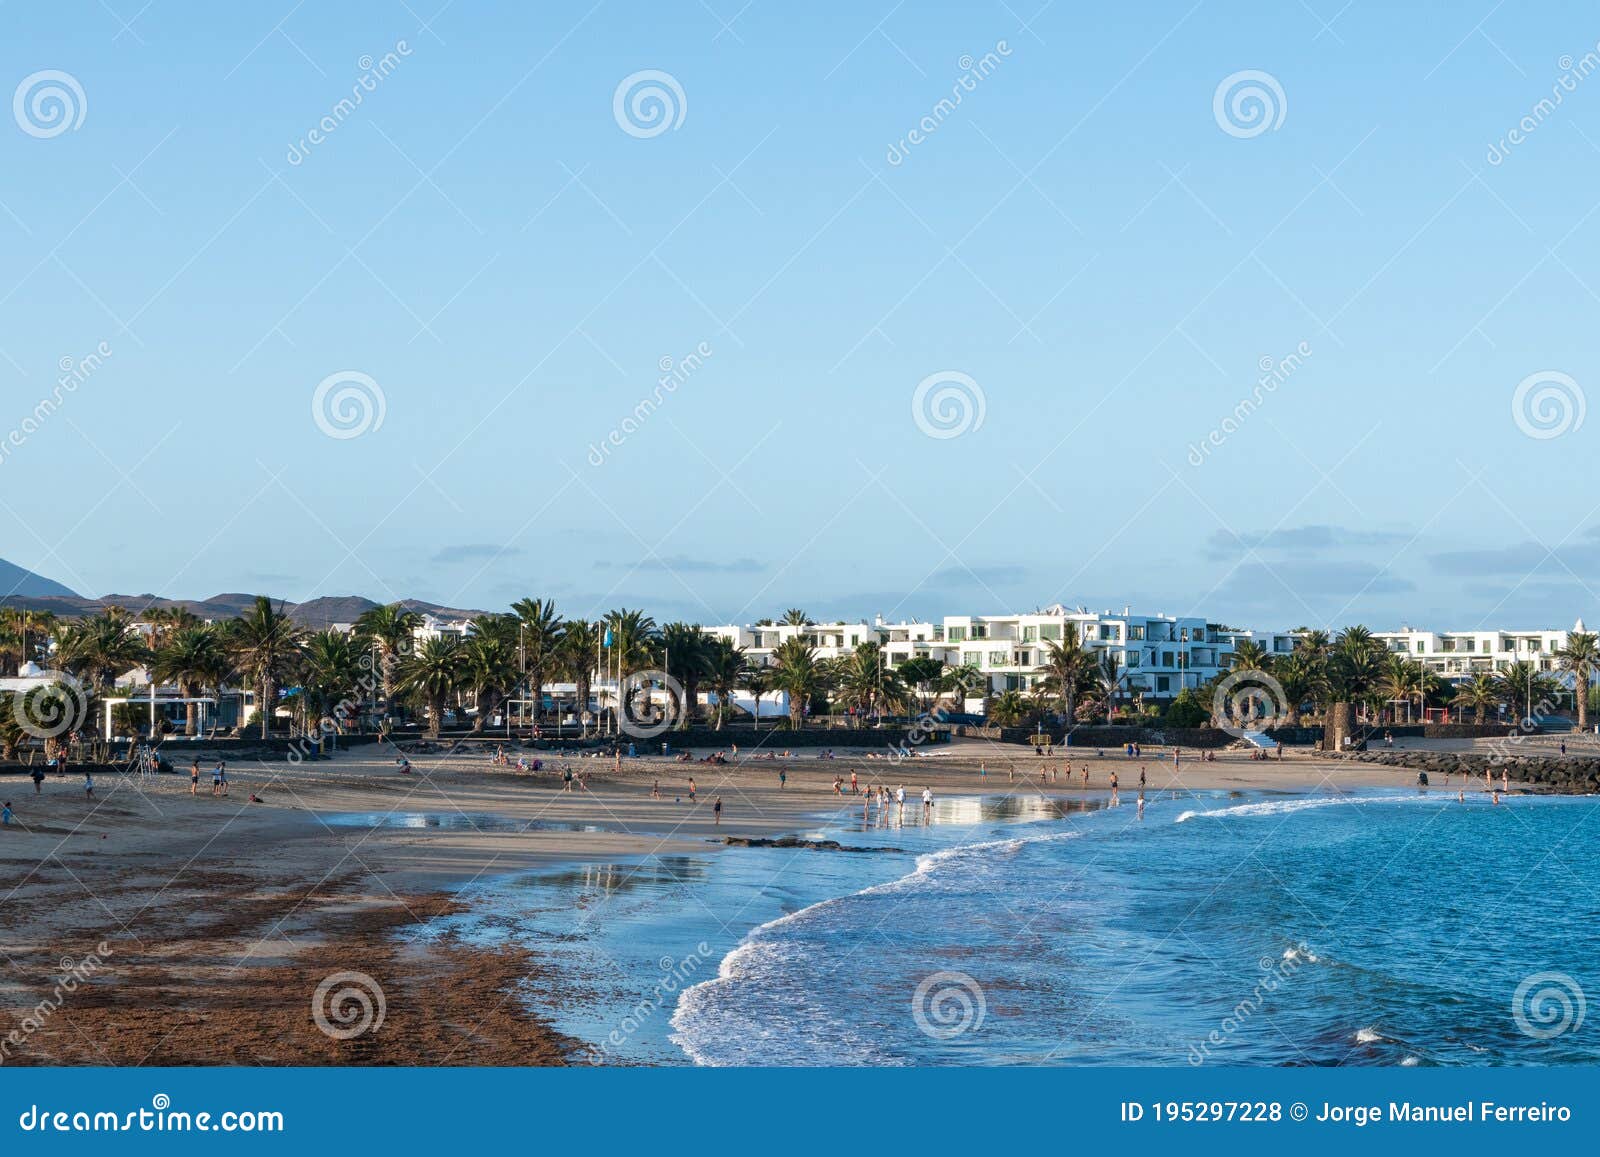 view of las cucharas beach in costa teguise, lanzarote